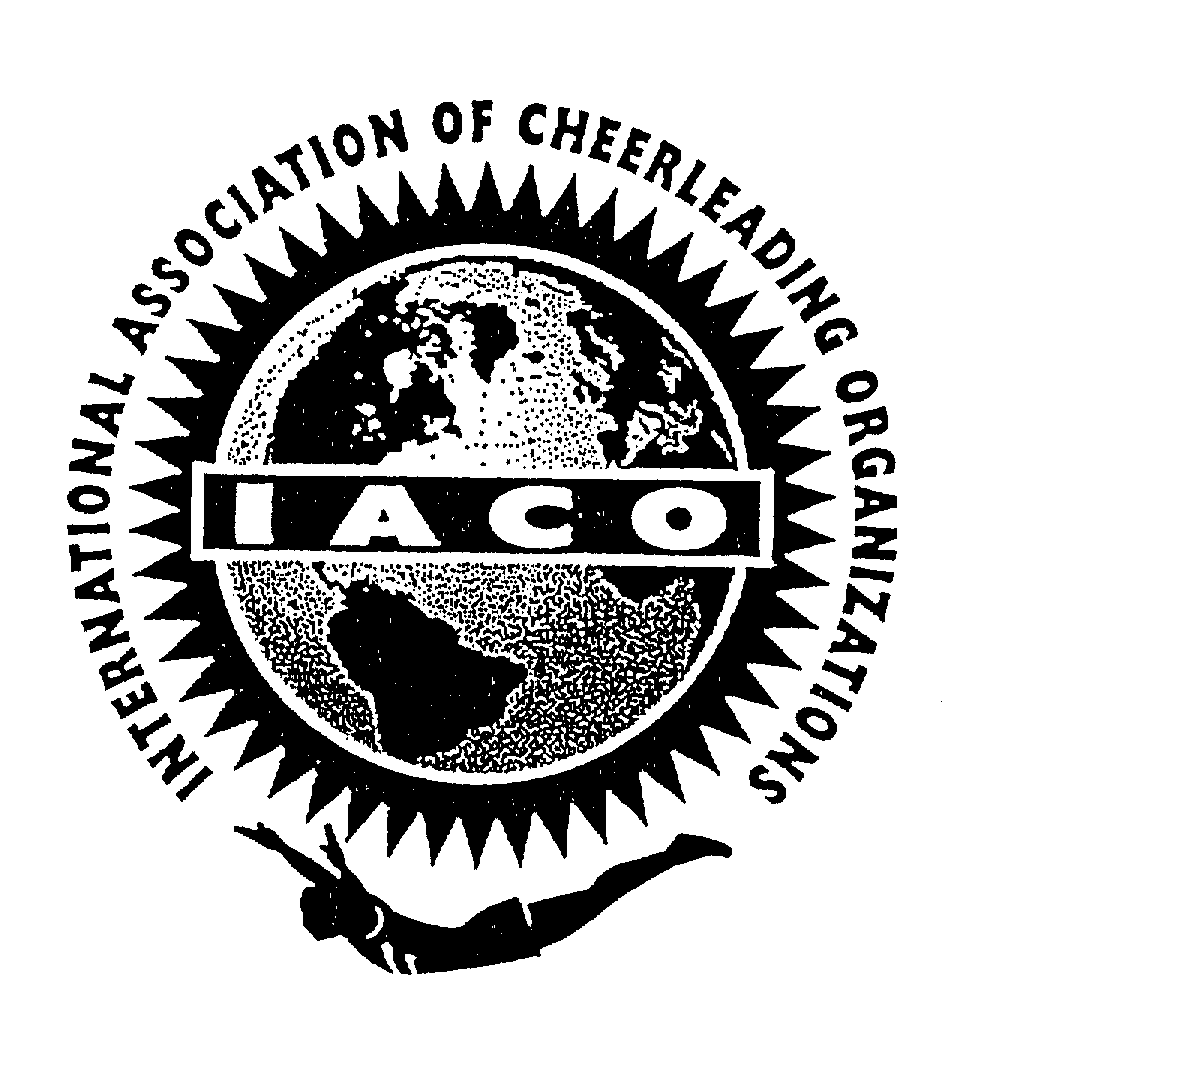  IACO INTERNATIONAL ASSOCIATION OF CHEERLEADING ORGANIZATIONS